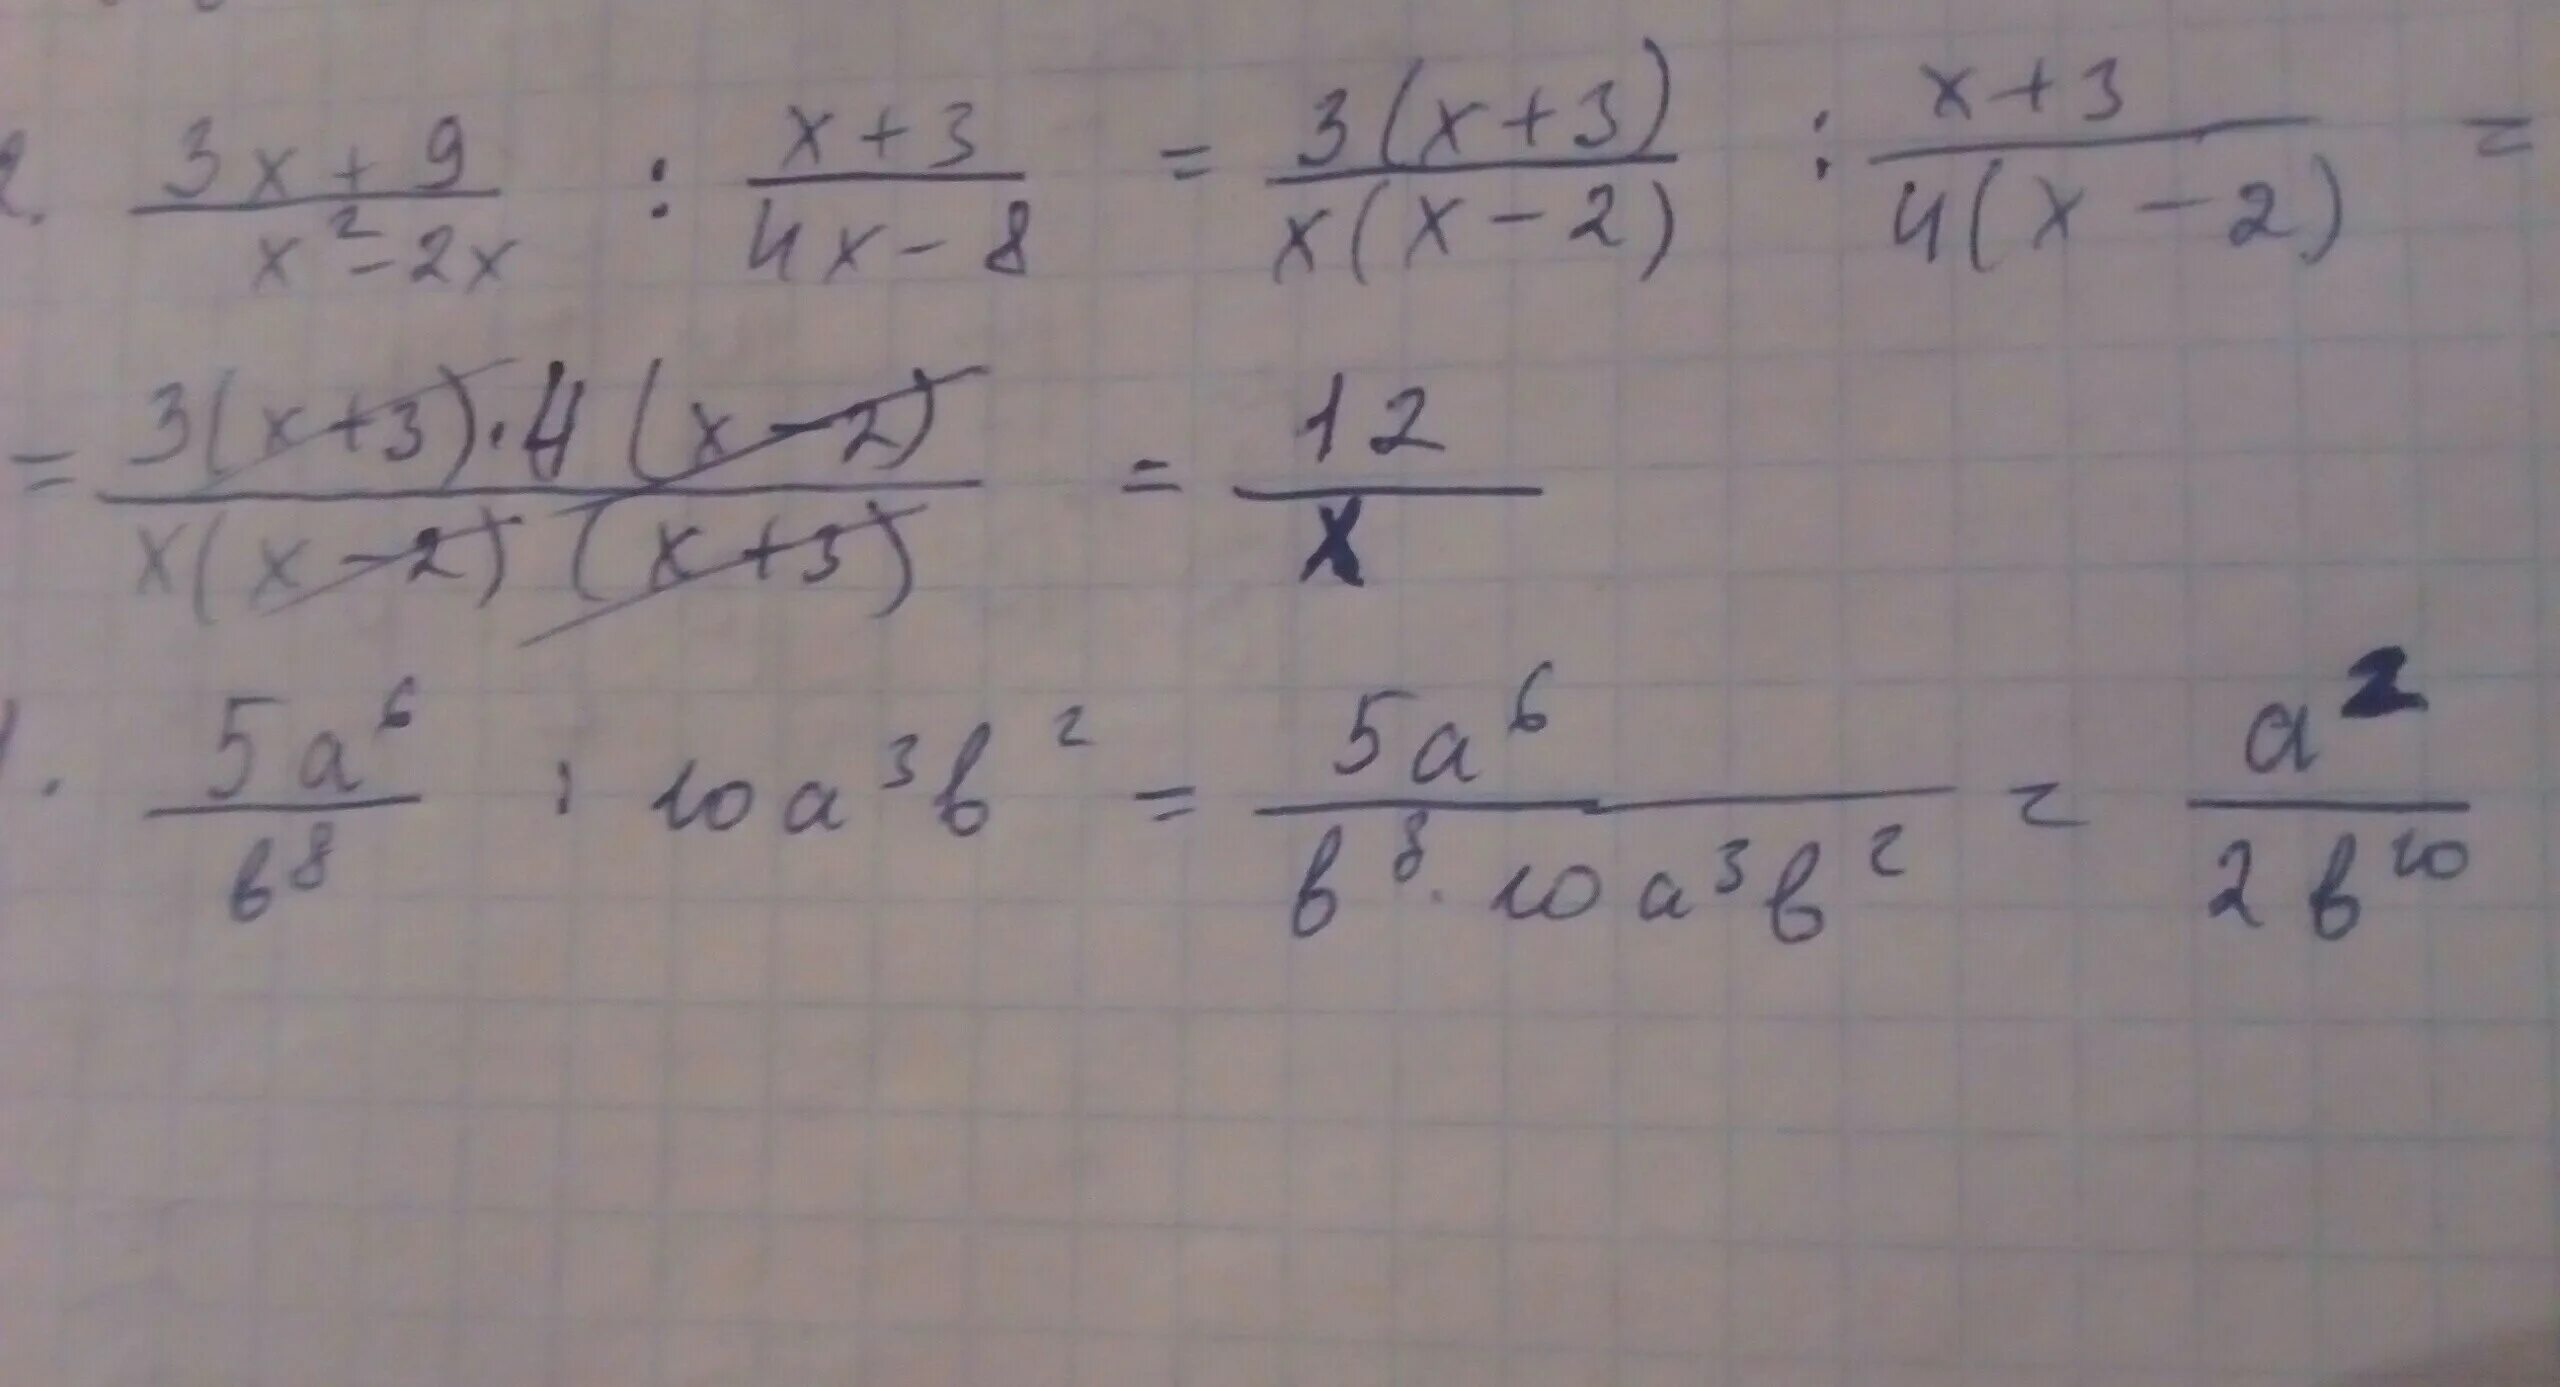 3 9x 28 3x 9. (Х-3)(Х+3). 3/Х+2-5/Х-3 -9/2. Х+1/3=5/6. Упростите выражения -9(3x-1/9)+(x+4/9).